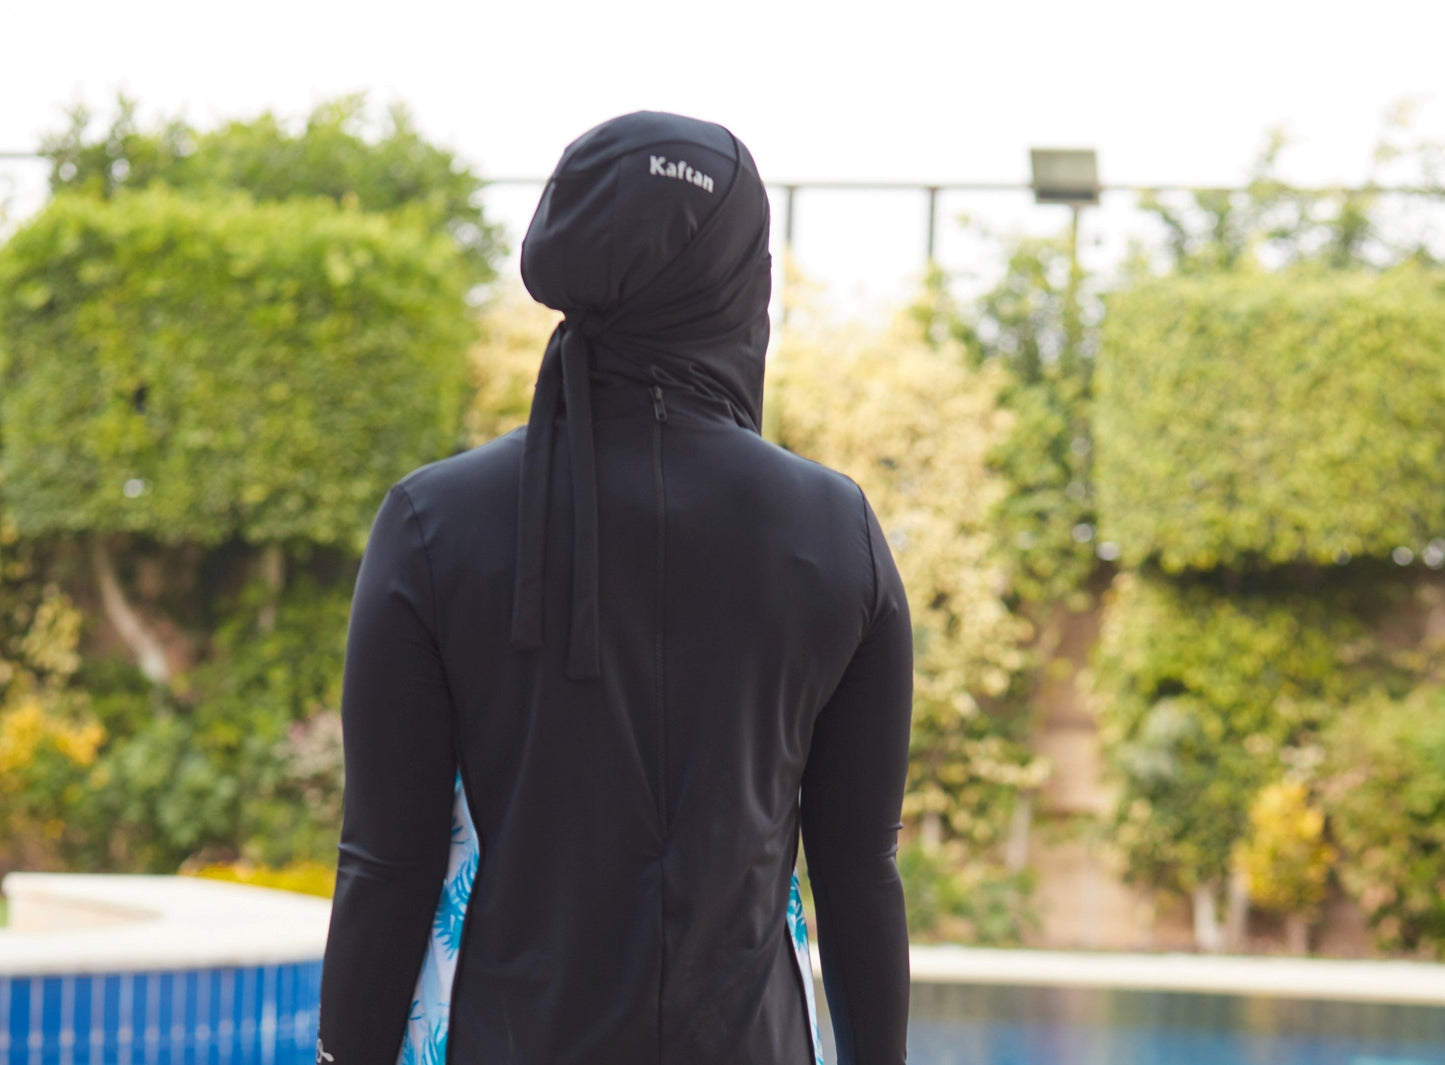 Swimming Niqab Set